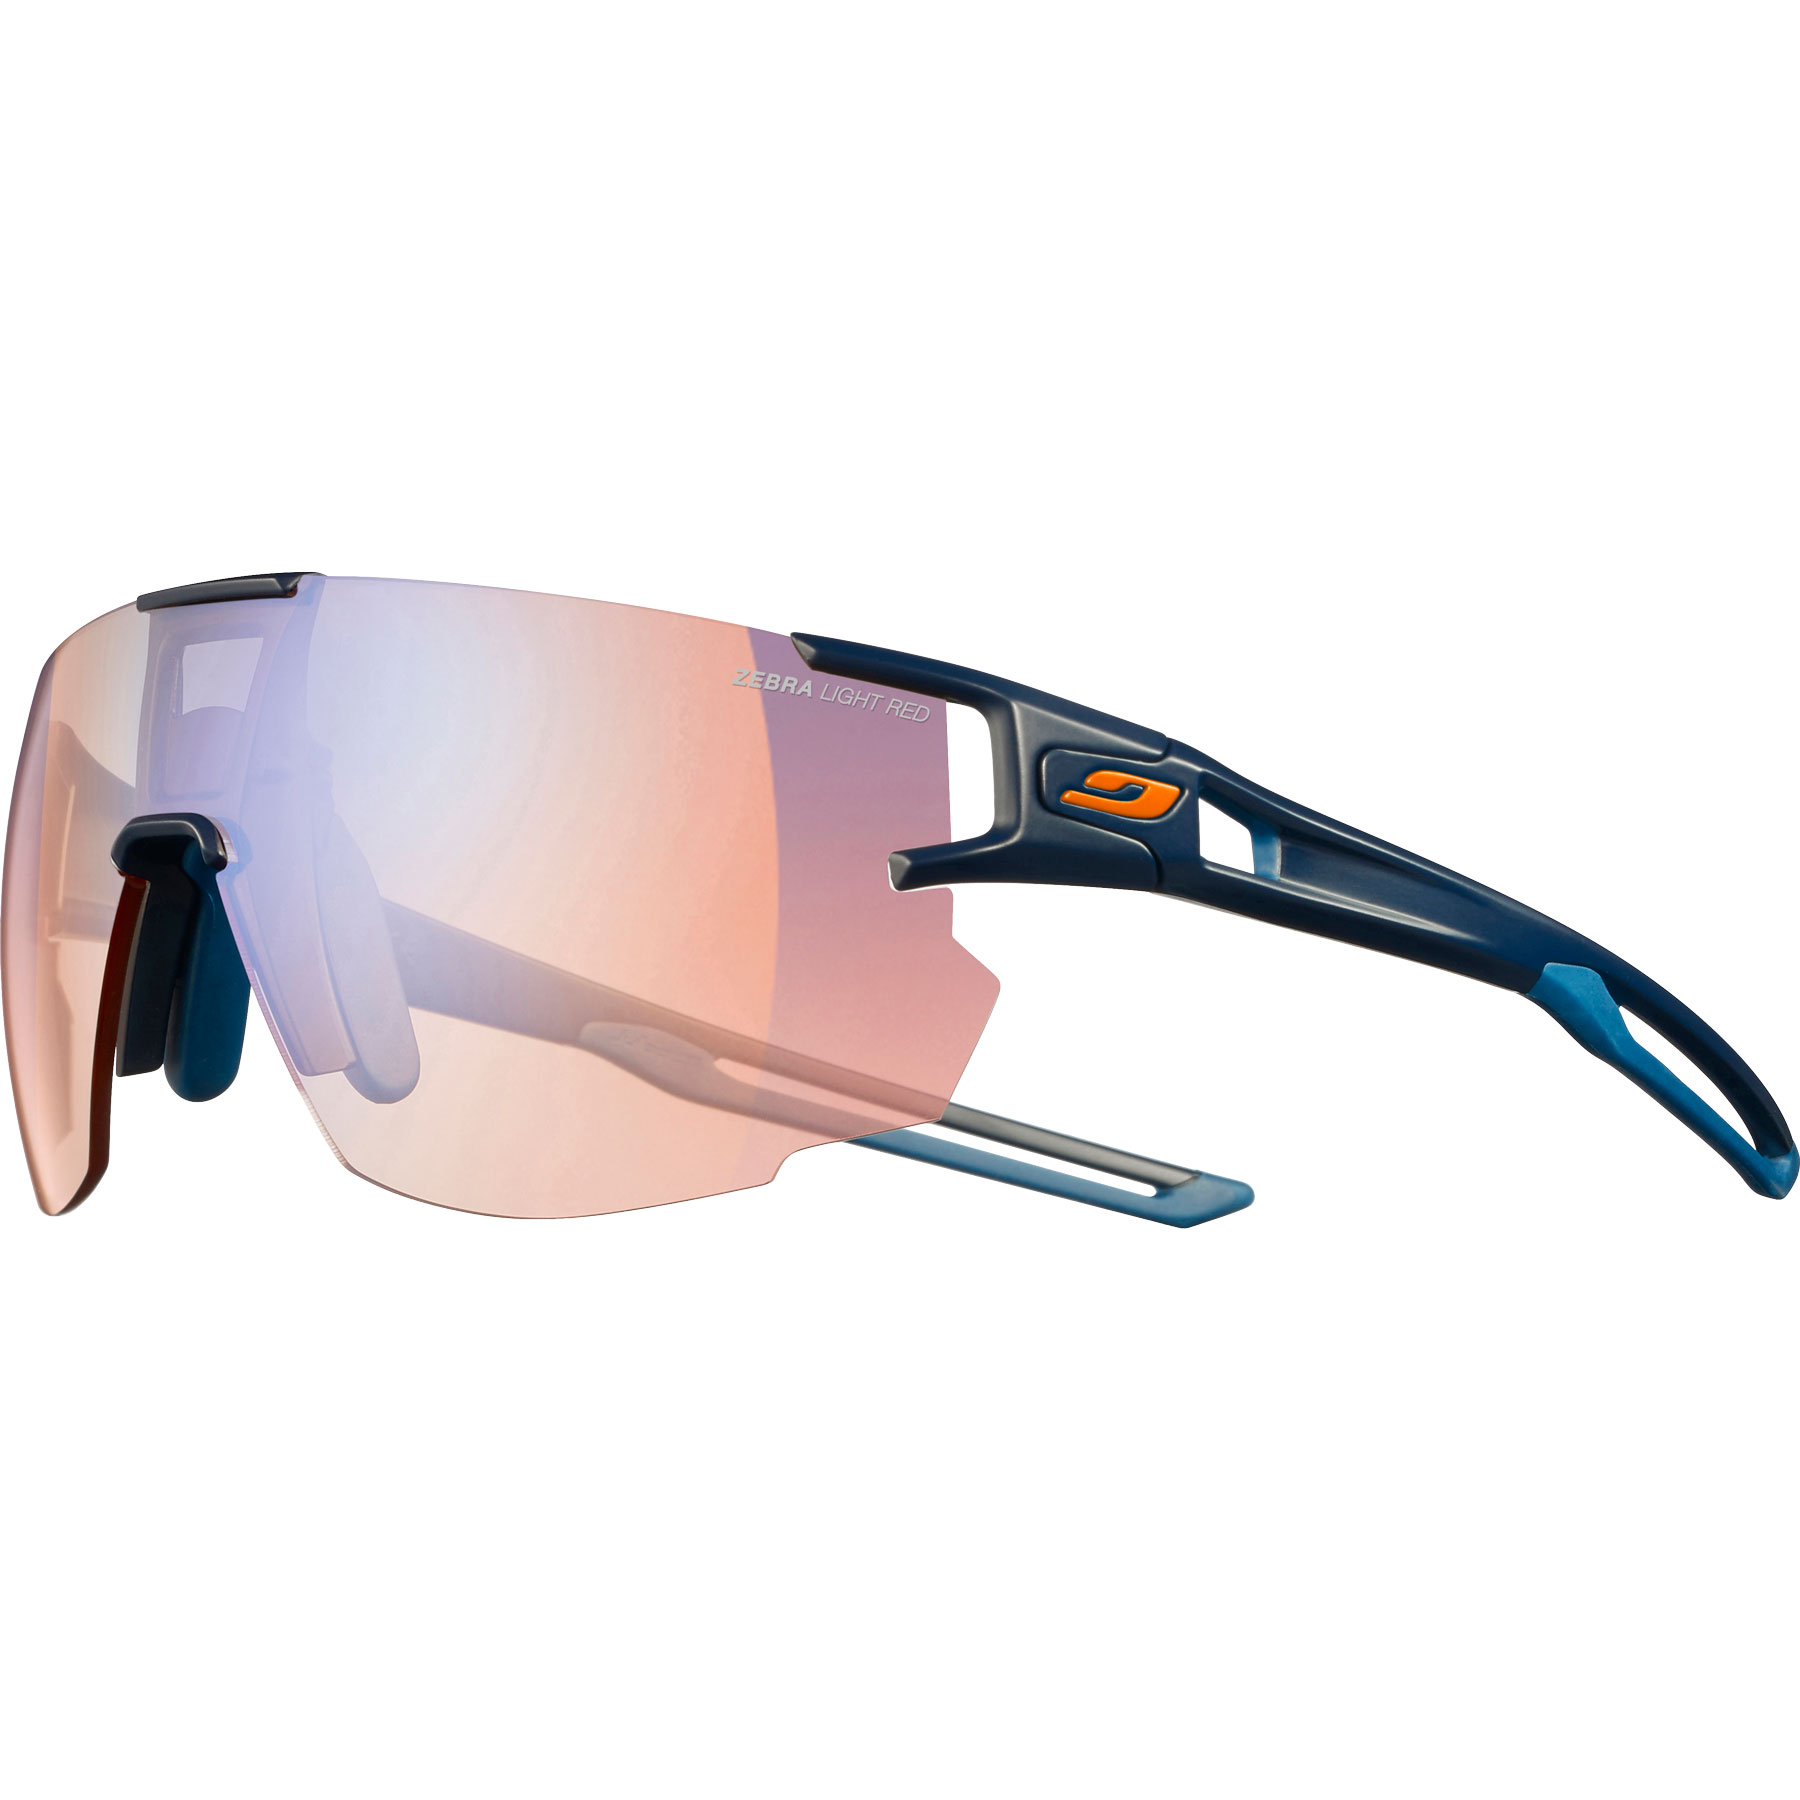 Productfoto van Julbo Aerospeed Reactiv Performance 1-3 Sunglasses - Darkblue Orange / Multilayer Blue